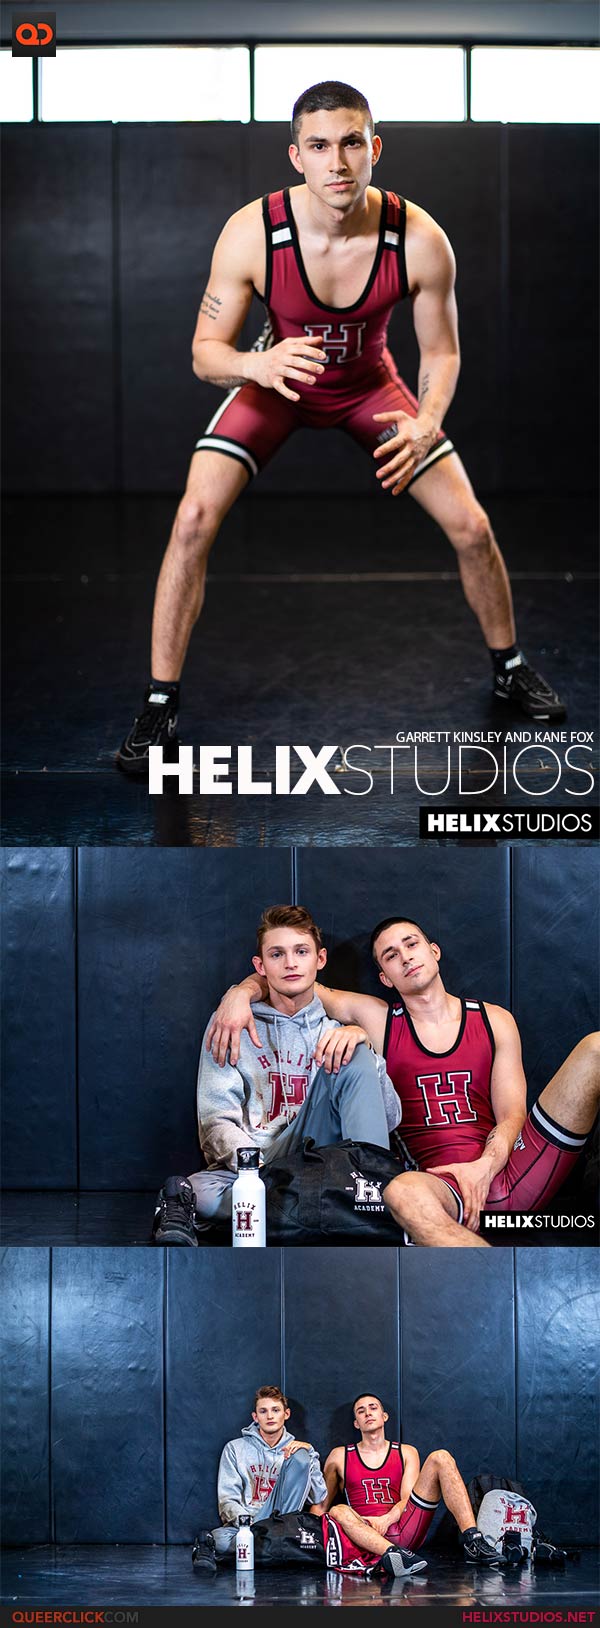 Helix Studios: Garrett Kinsley and Kane Fox